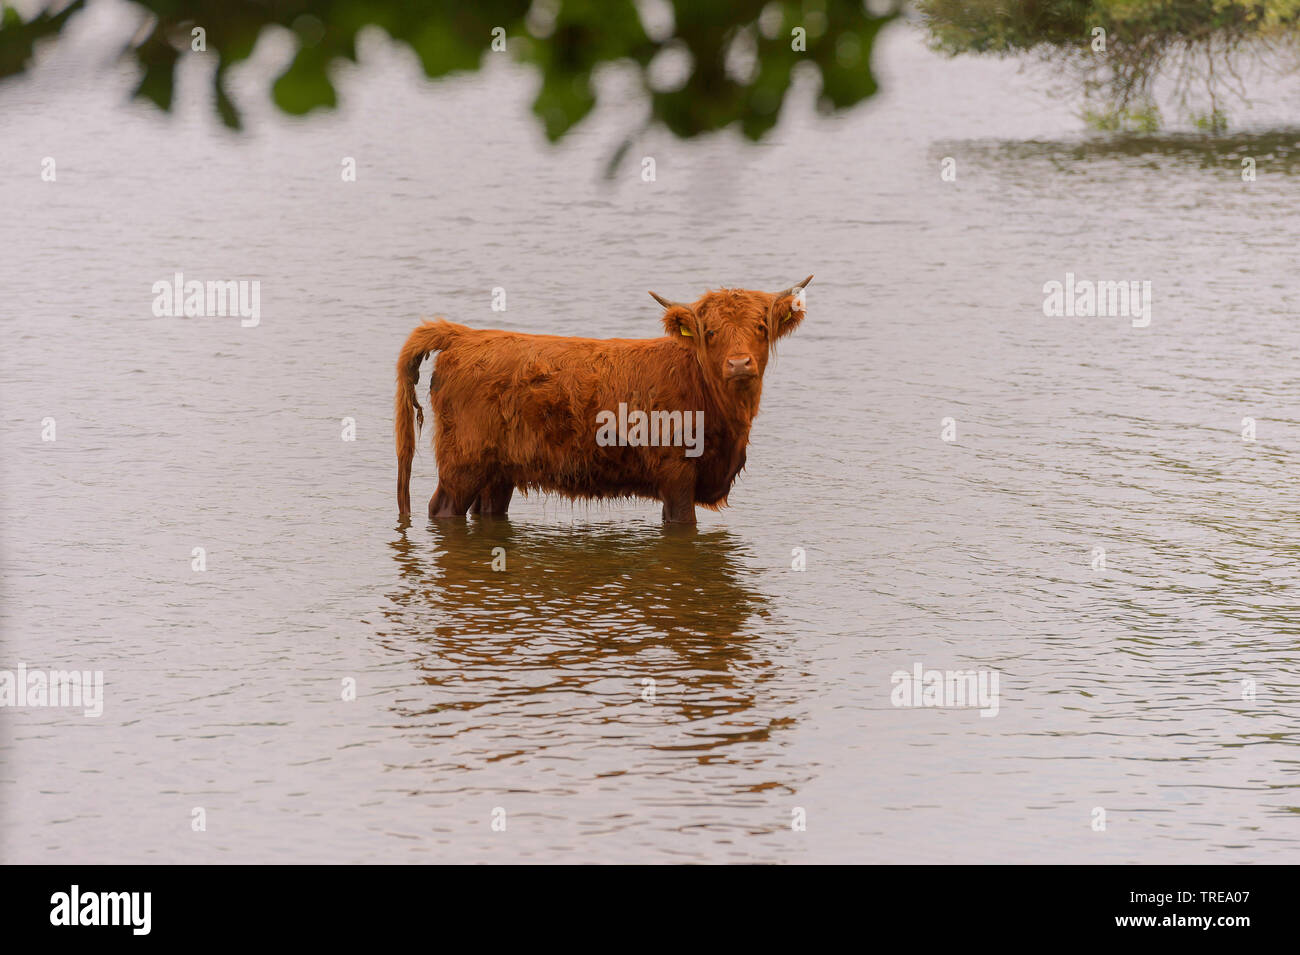 Scottish Highland cattle, Kyloe, Highland vache, Heelan coo (Bos primigenius f. taurus), debout dans l'eau peu profonde du lac de Berlin, Allemagne, Schleswig-Holstein Banque D'Images